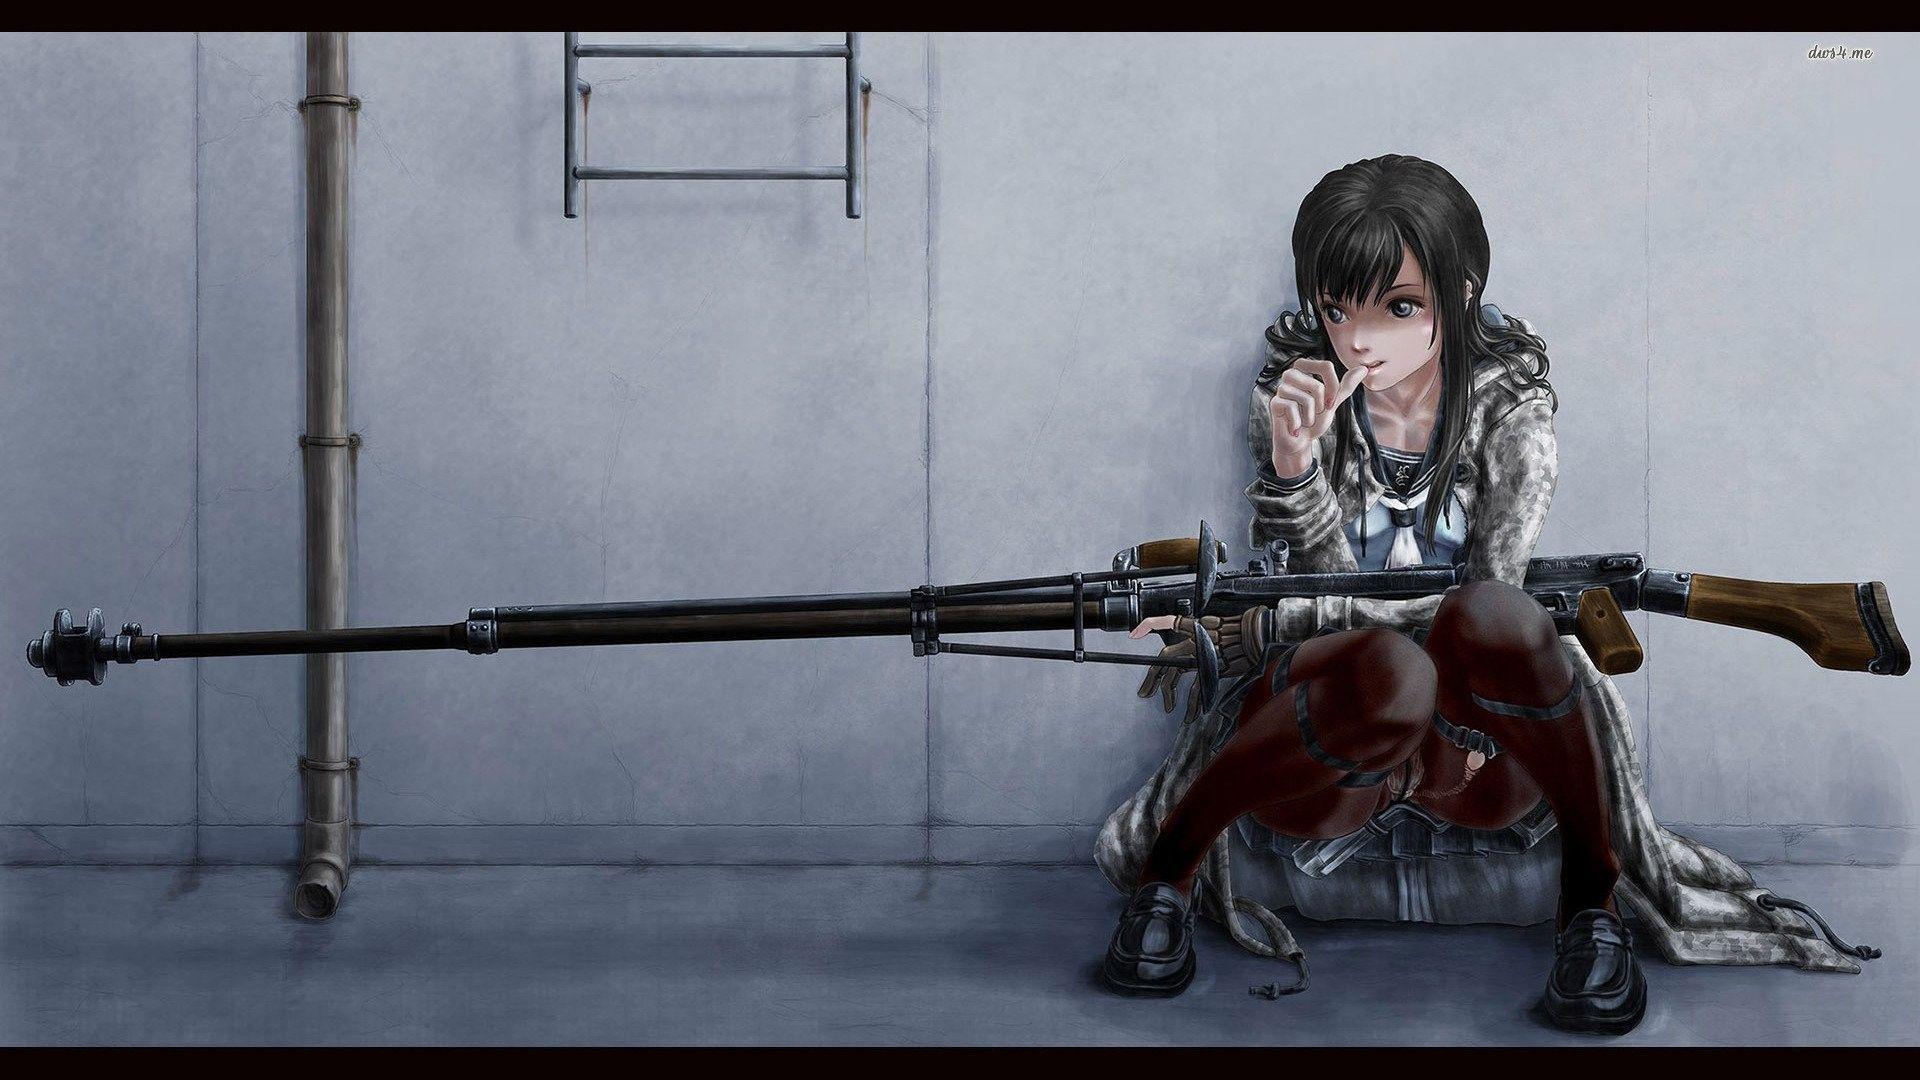 Anime Sniper Wallpaper. Sniper girl, Cyberpunk girl